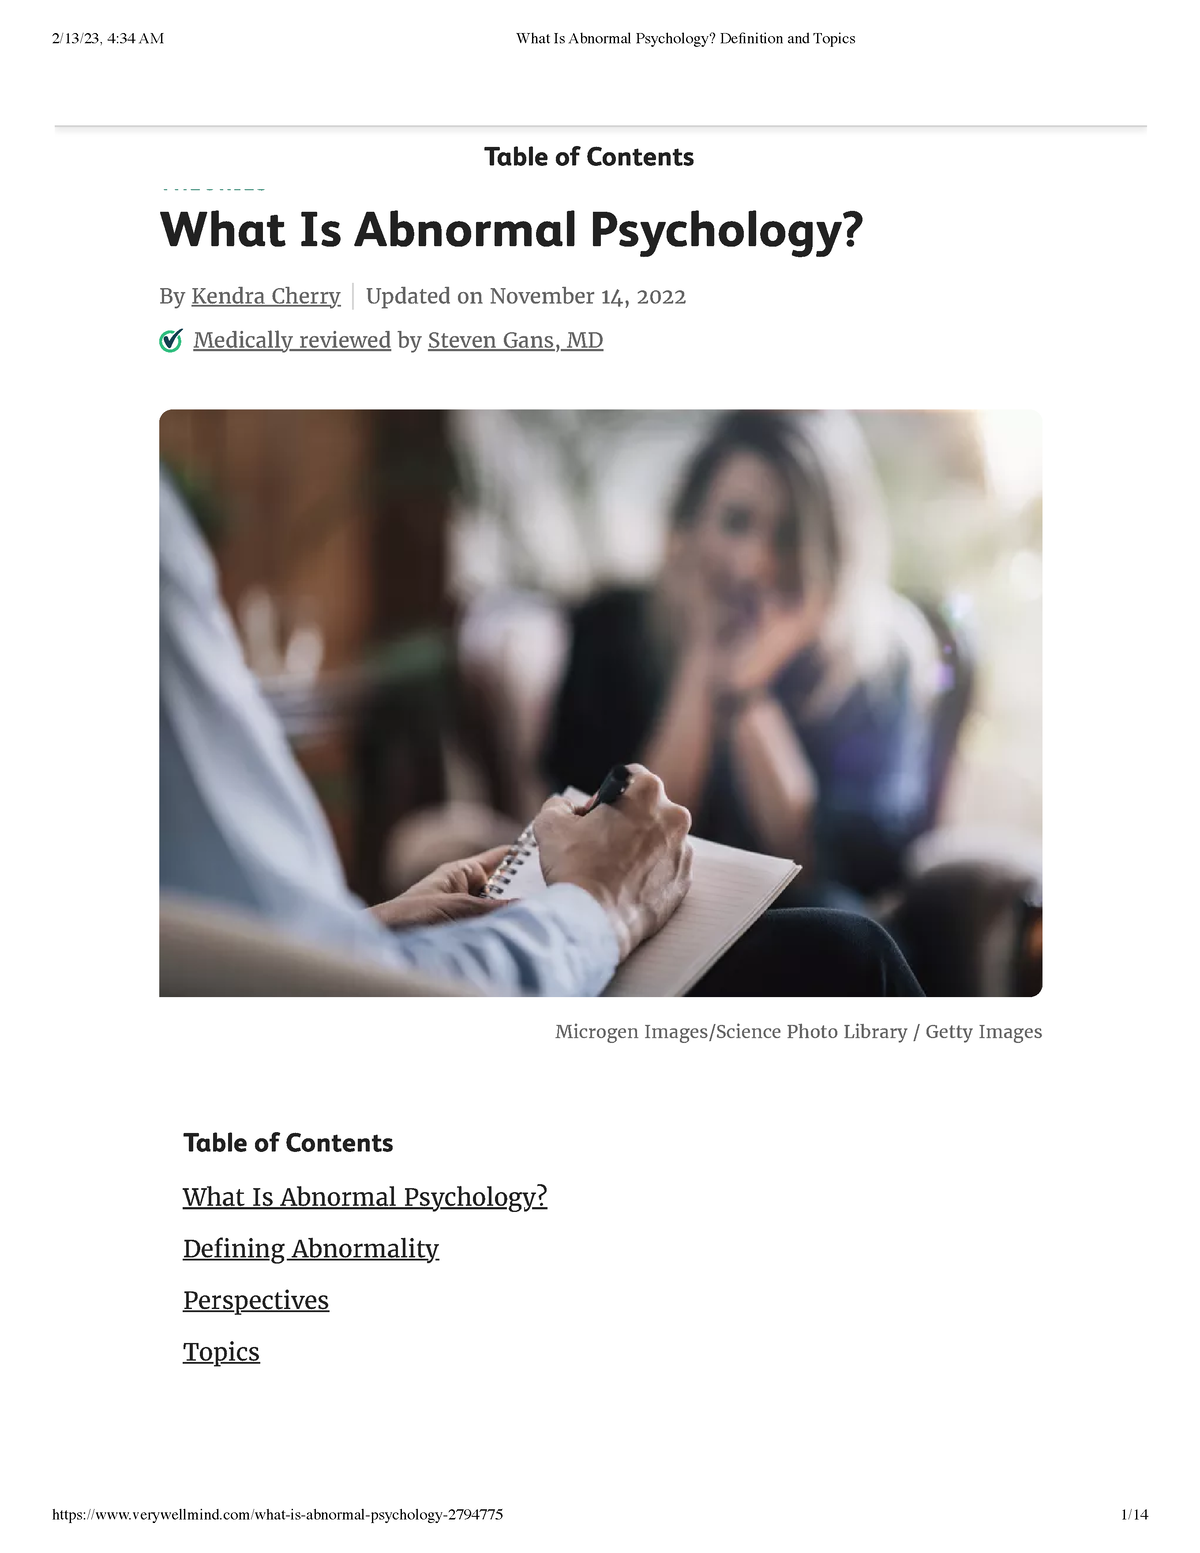 dissertation topics on abnormal psychology